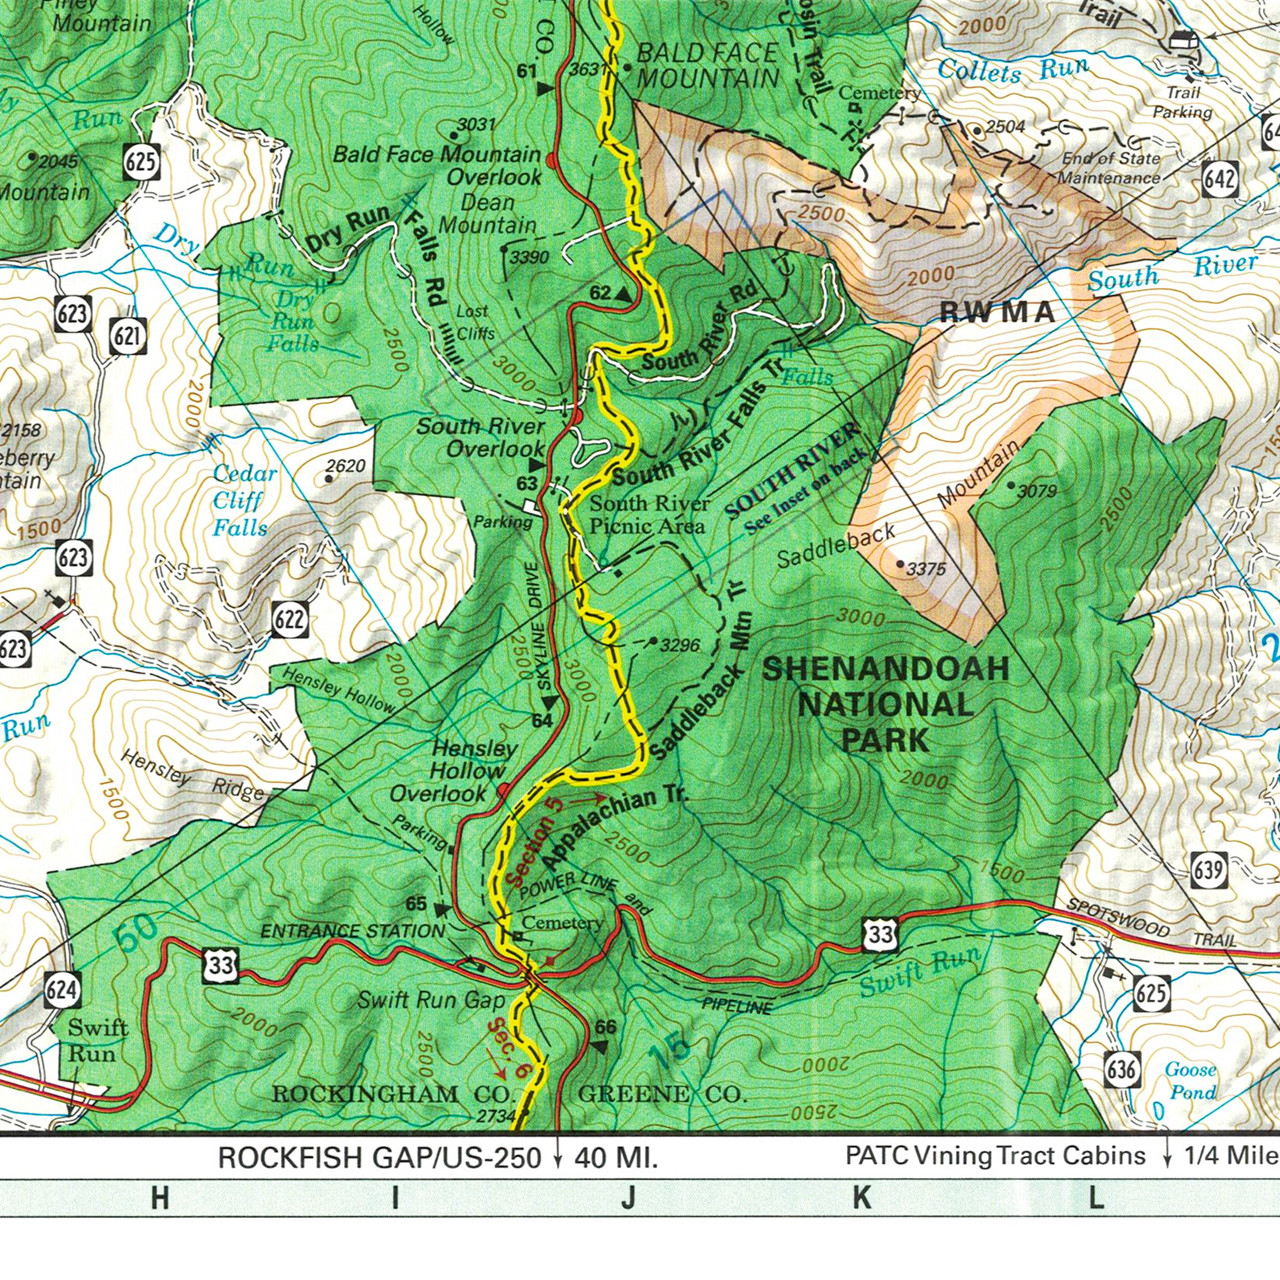 Appalachian Trail Through Shenandoah Park Map 